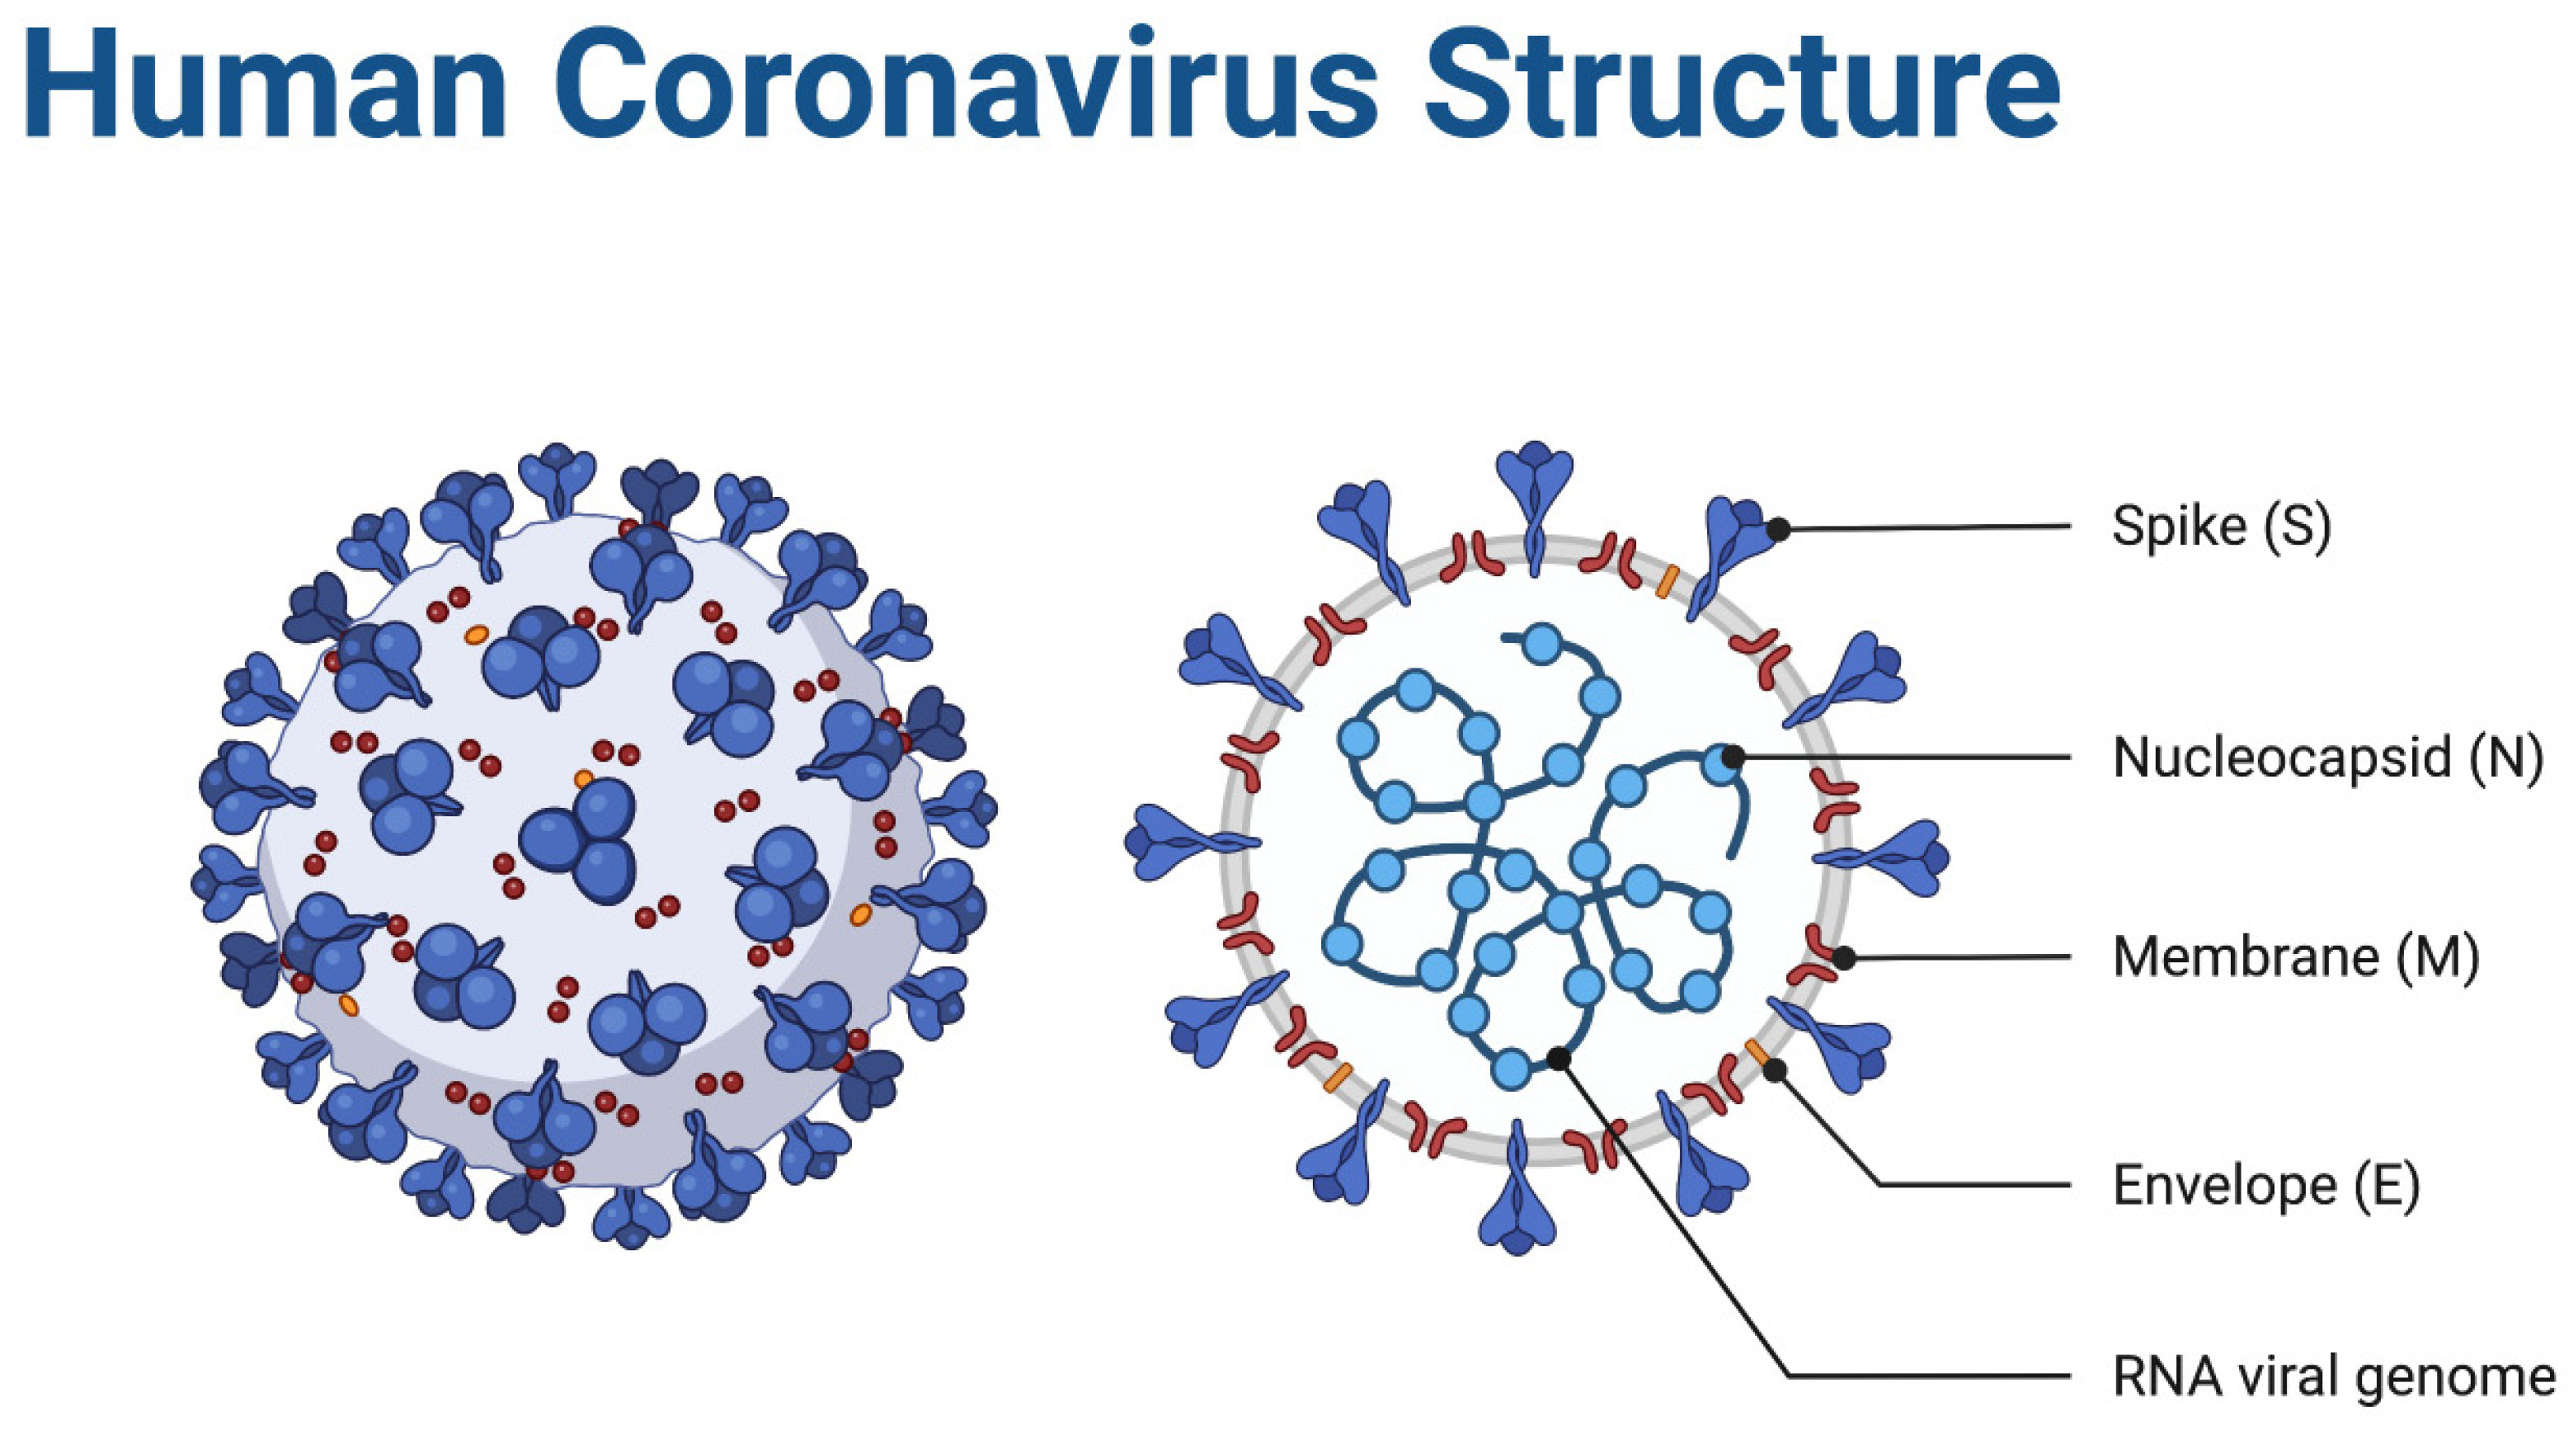 2 штамм коронавируса. Коронавирус строение. Структура SARS-cov-2. Коронавирус SARS-cov-2 строение. Строение вируса SARS-cov-2.